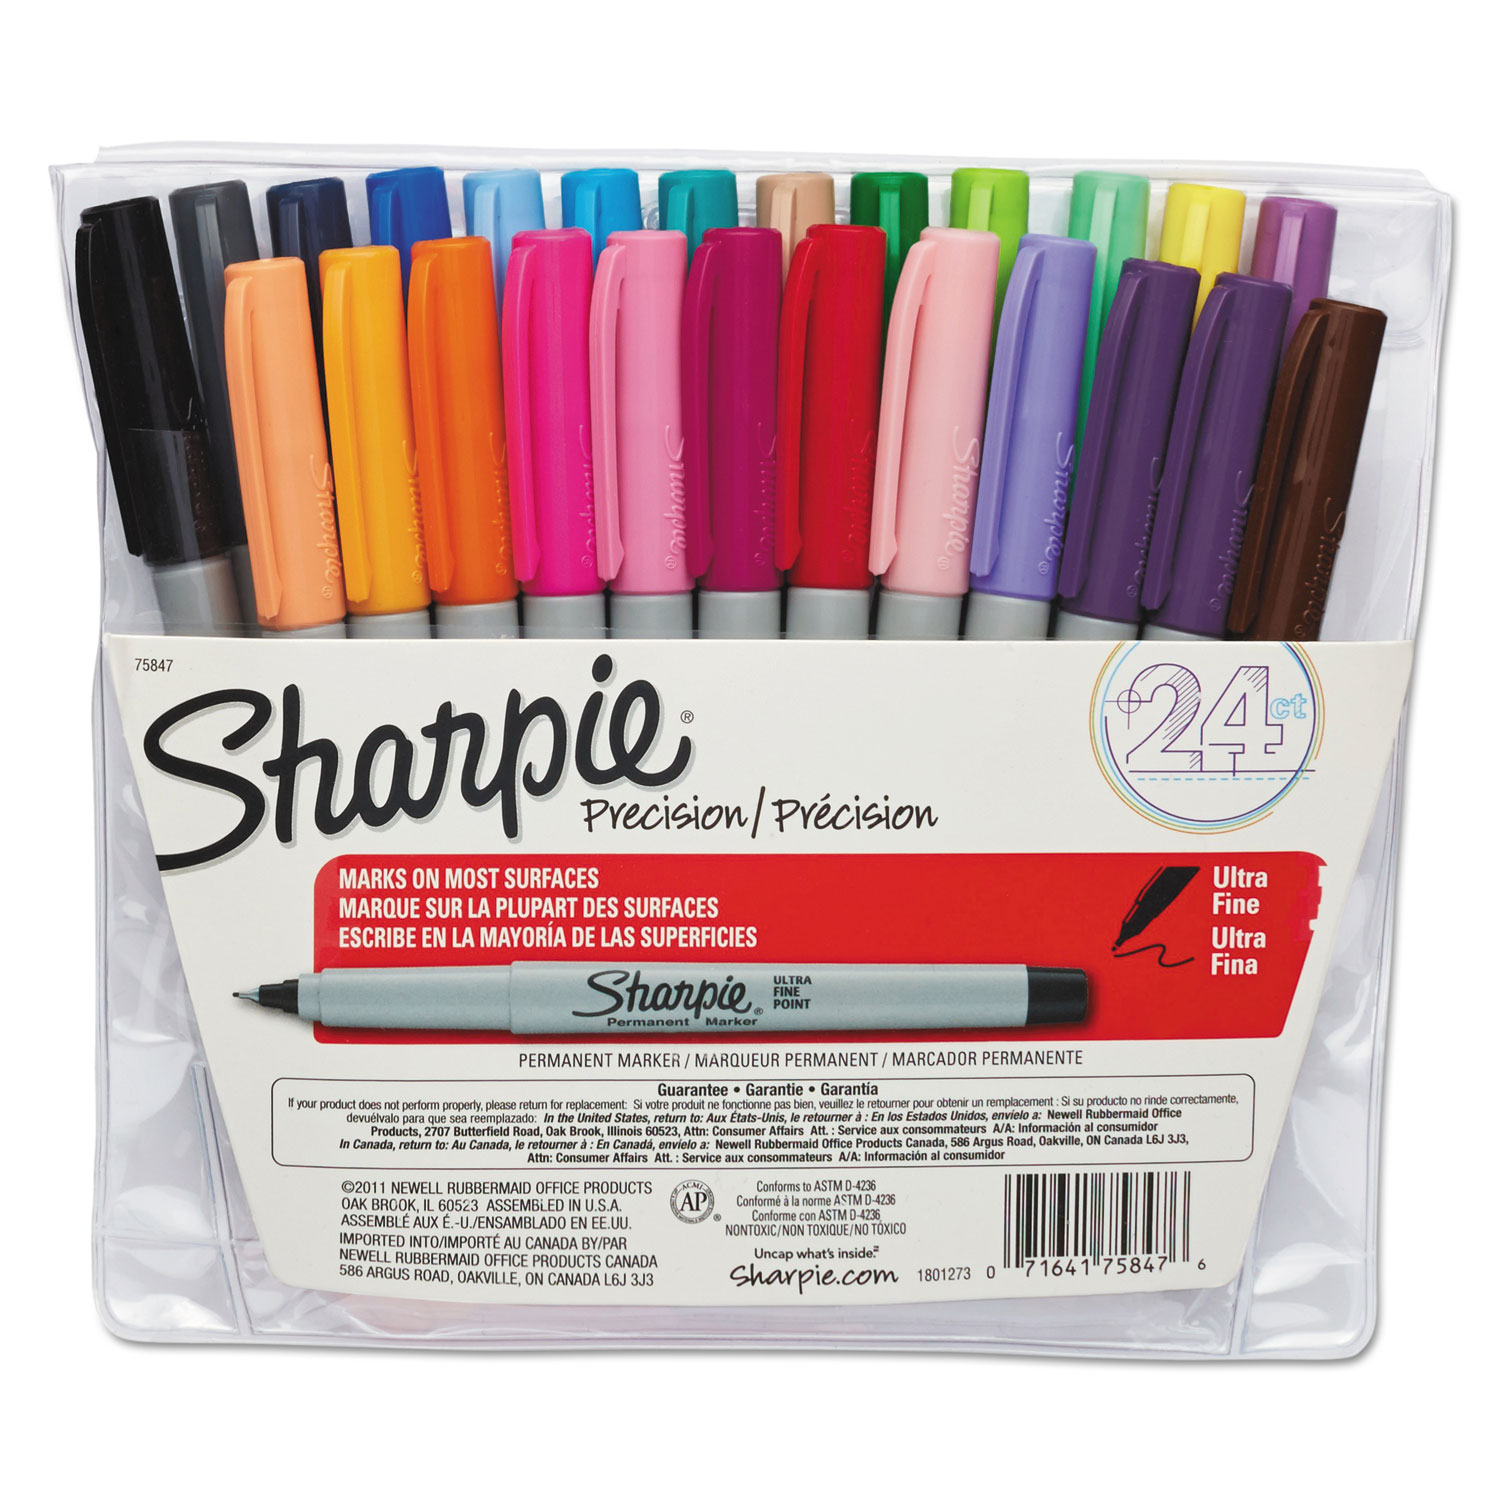 Sharpie Color Burst Limited Edition Permanent Marker, Fine Point, Assorted Colors, 5 Count